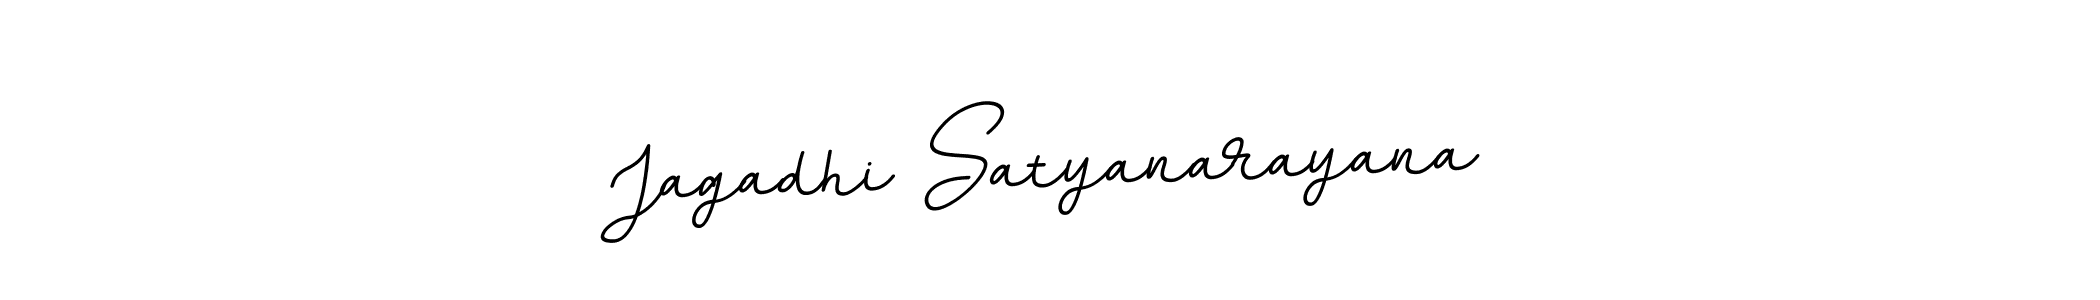 Jagadhi Satyanarayana stylish signature style. Best Handwritten Sign (BallpointsItalic-DORy9) for my name. Handwritten Signature Collection Ideas for my name Jagadhi Satyanarayana. Jagadhi Satyanarayana signature style 11 images and pictures png